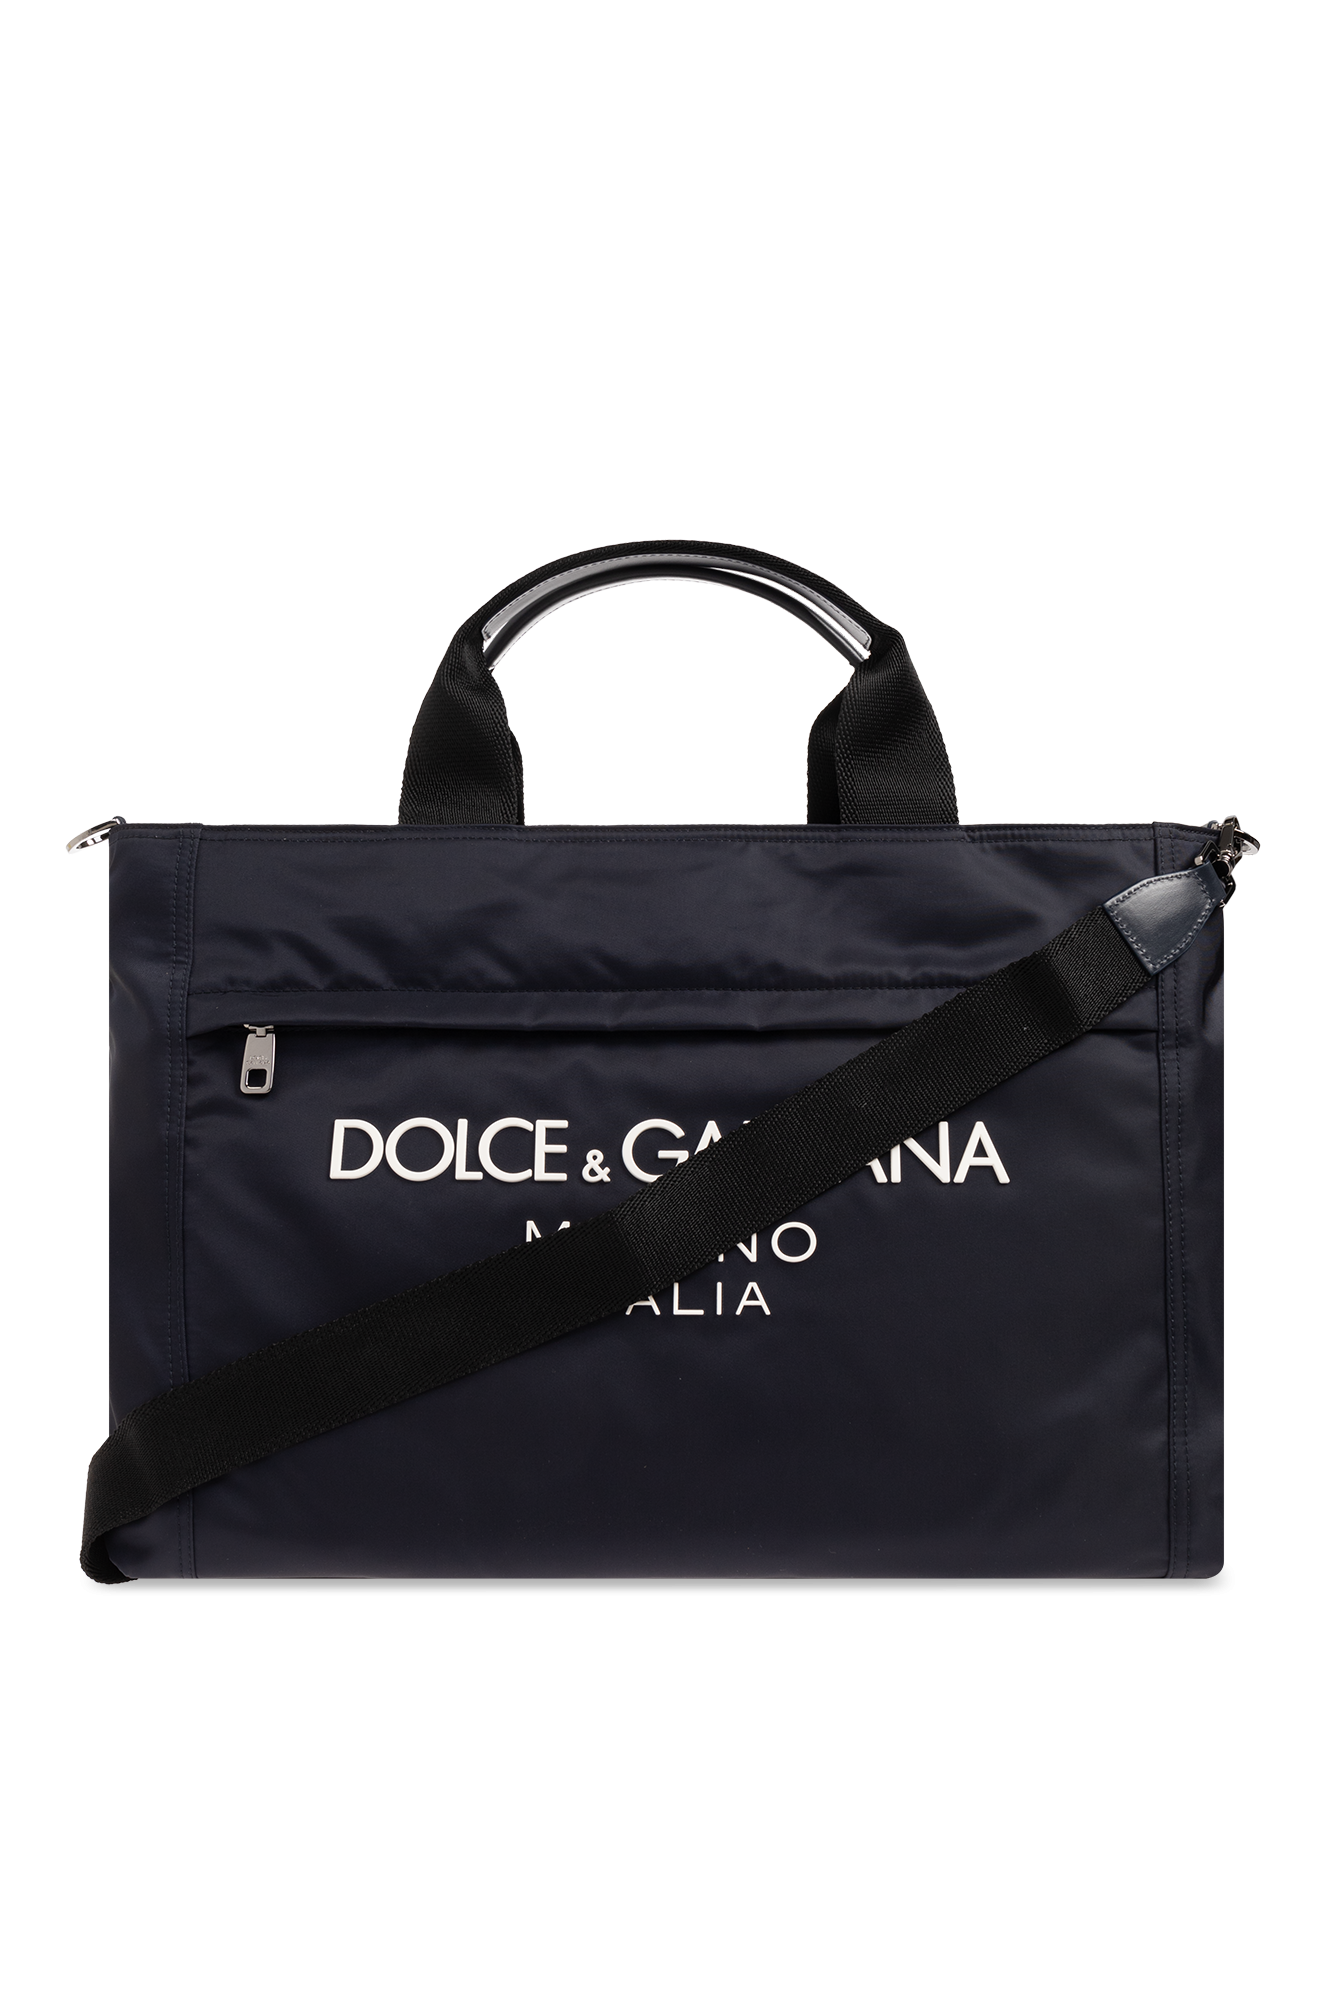 dolce logo-jacquard & Gabbana Shopper bag with logo